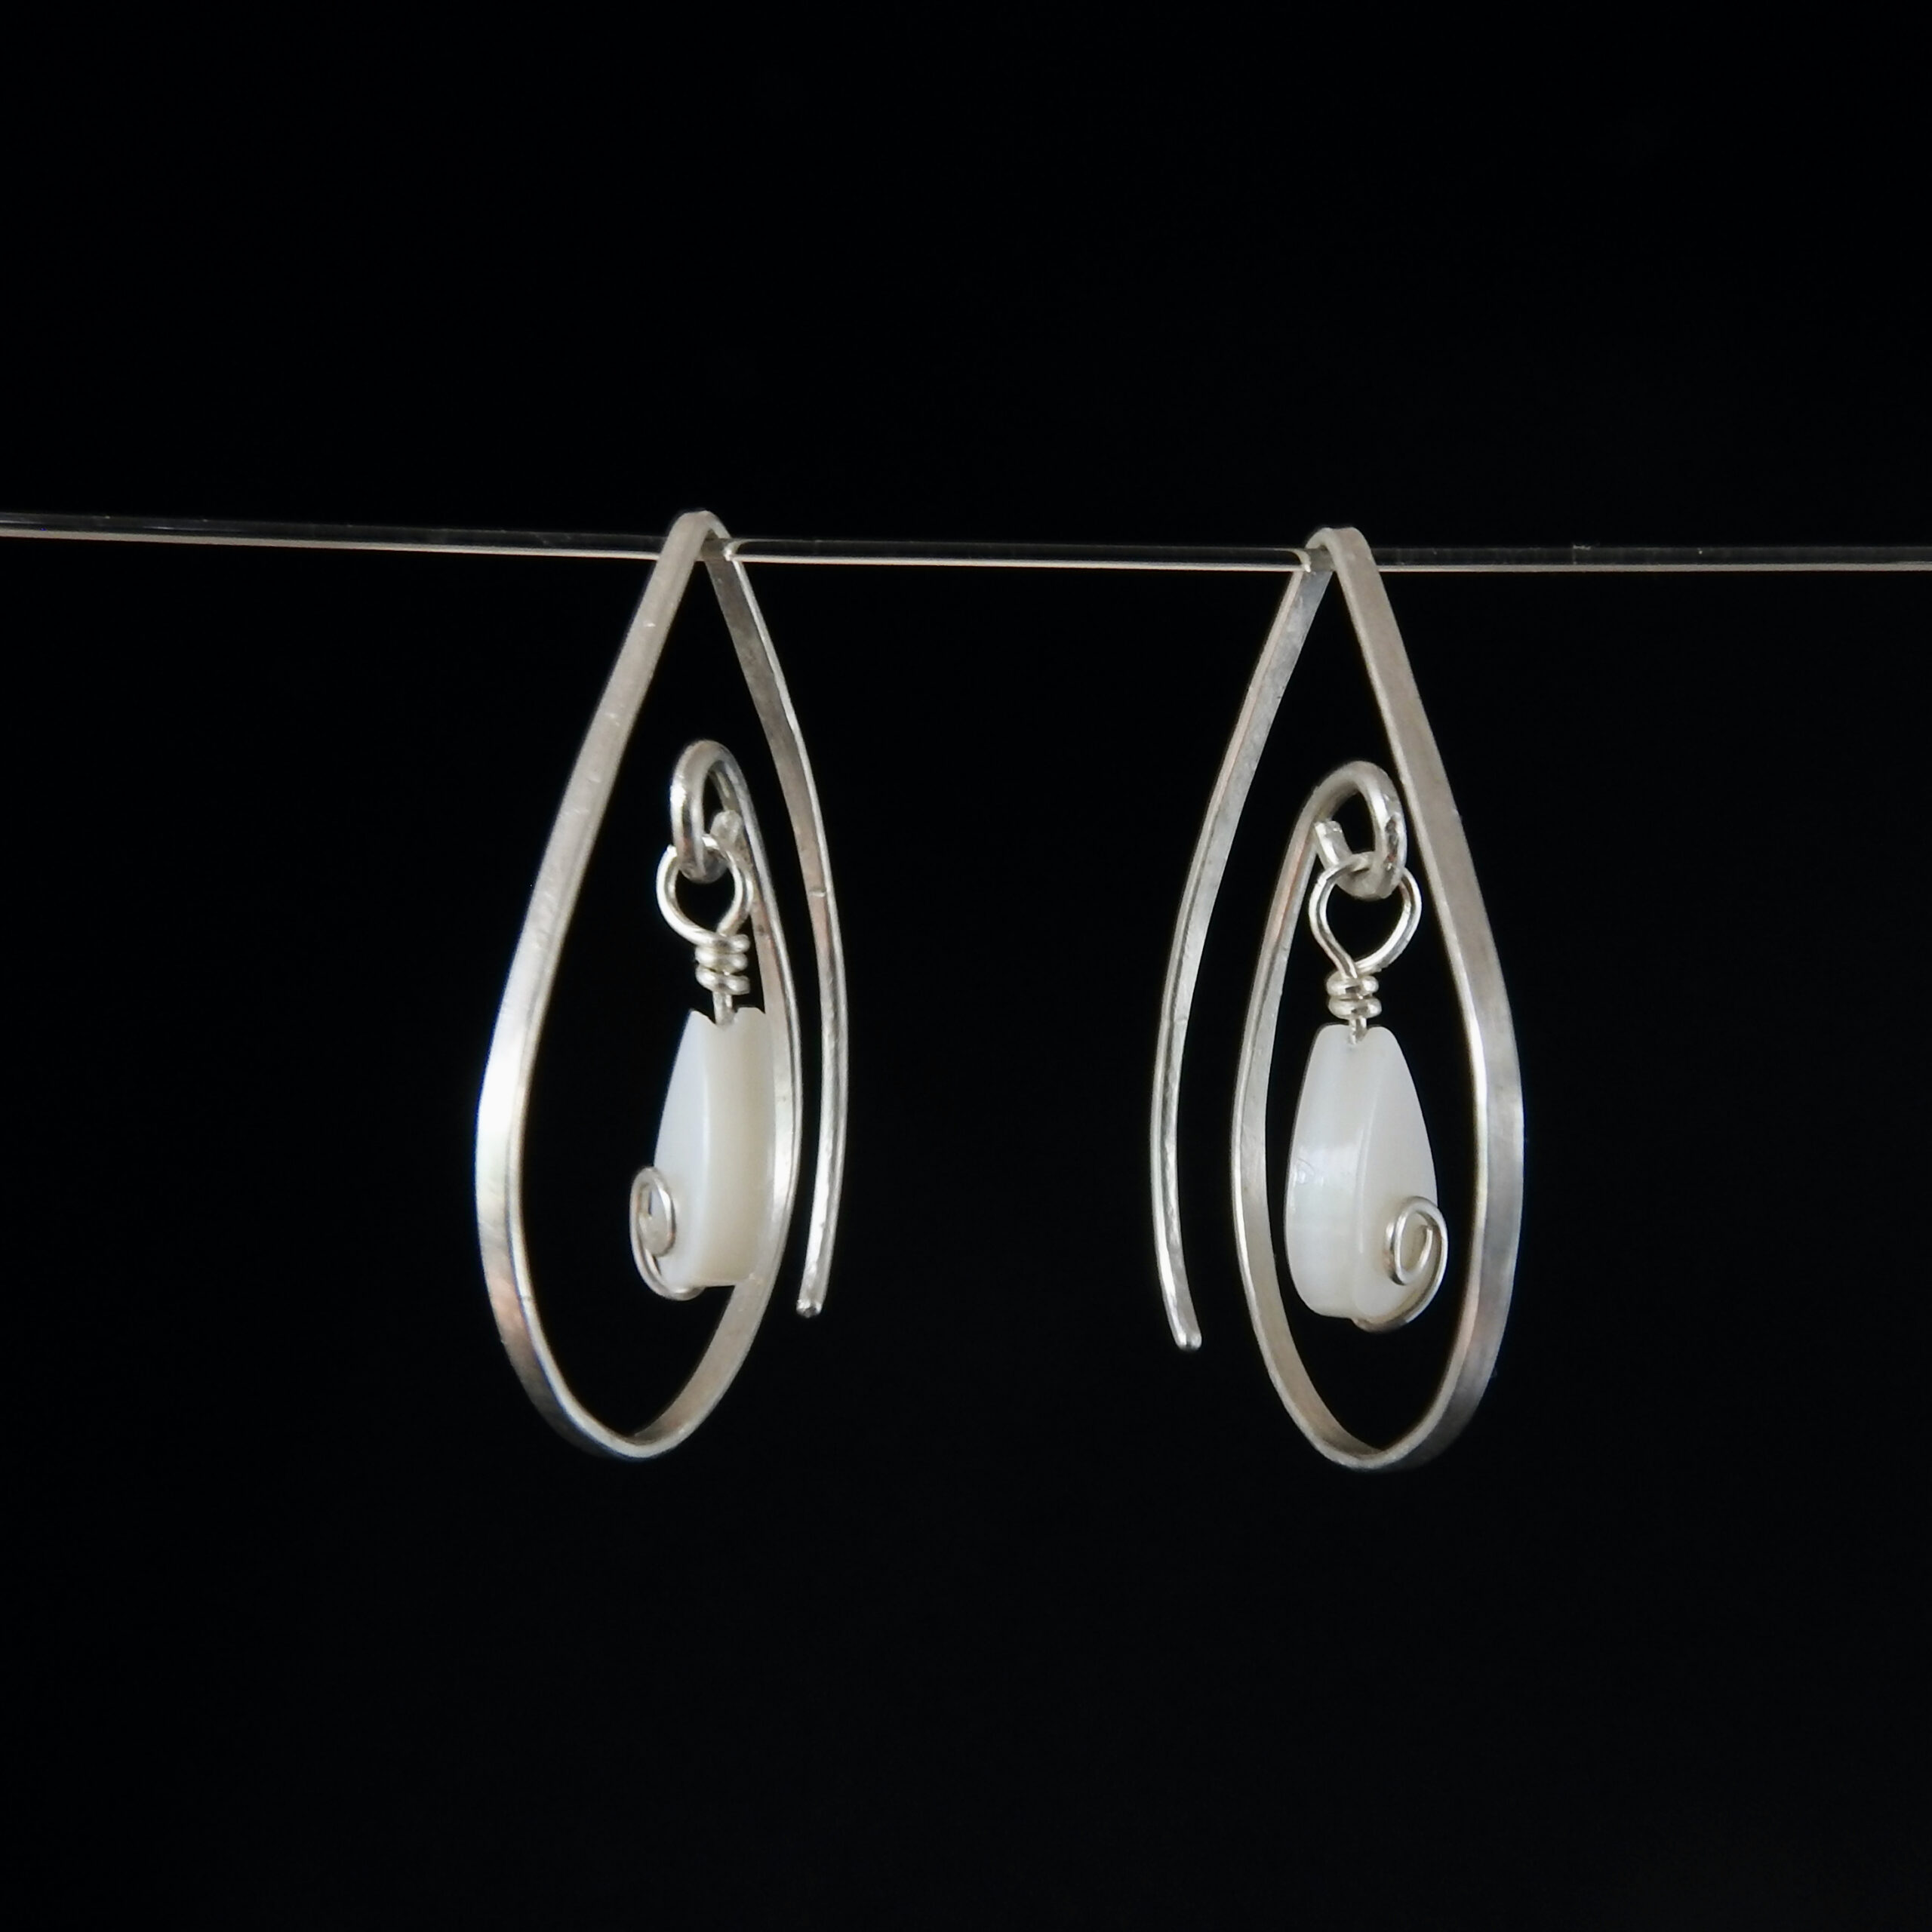 MOP TearDrop Earrings Hanging Black Background1